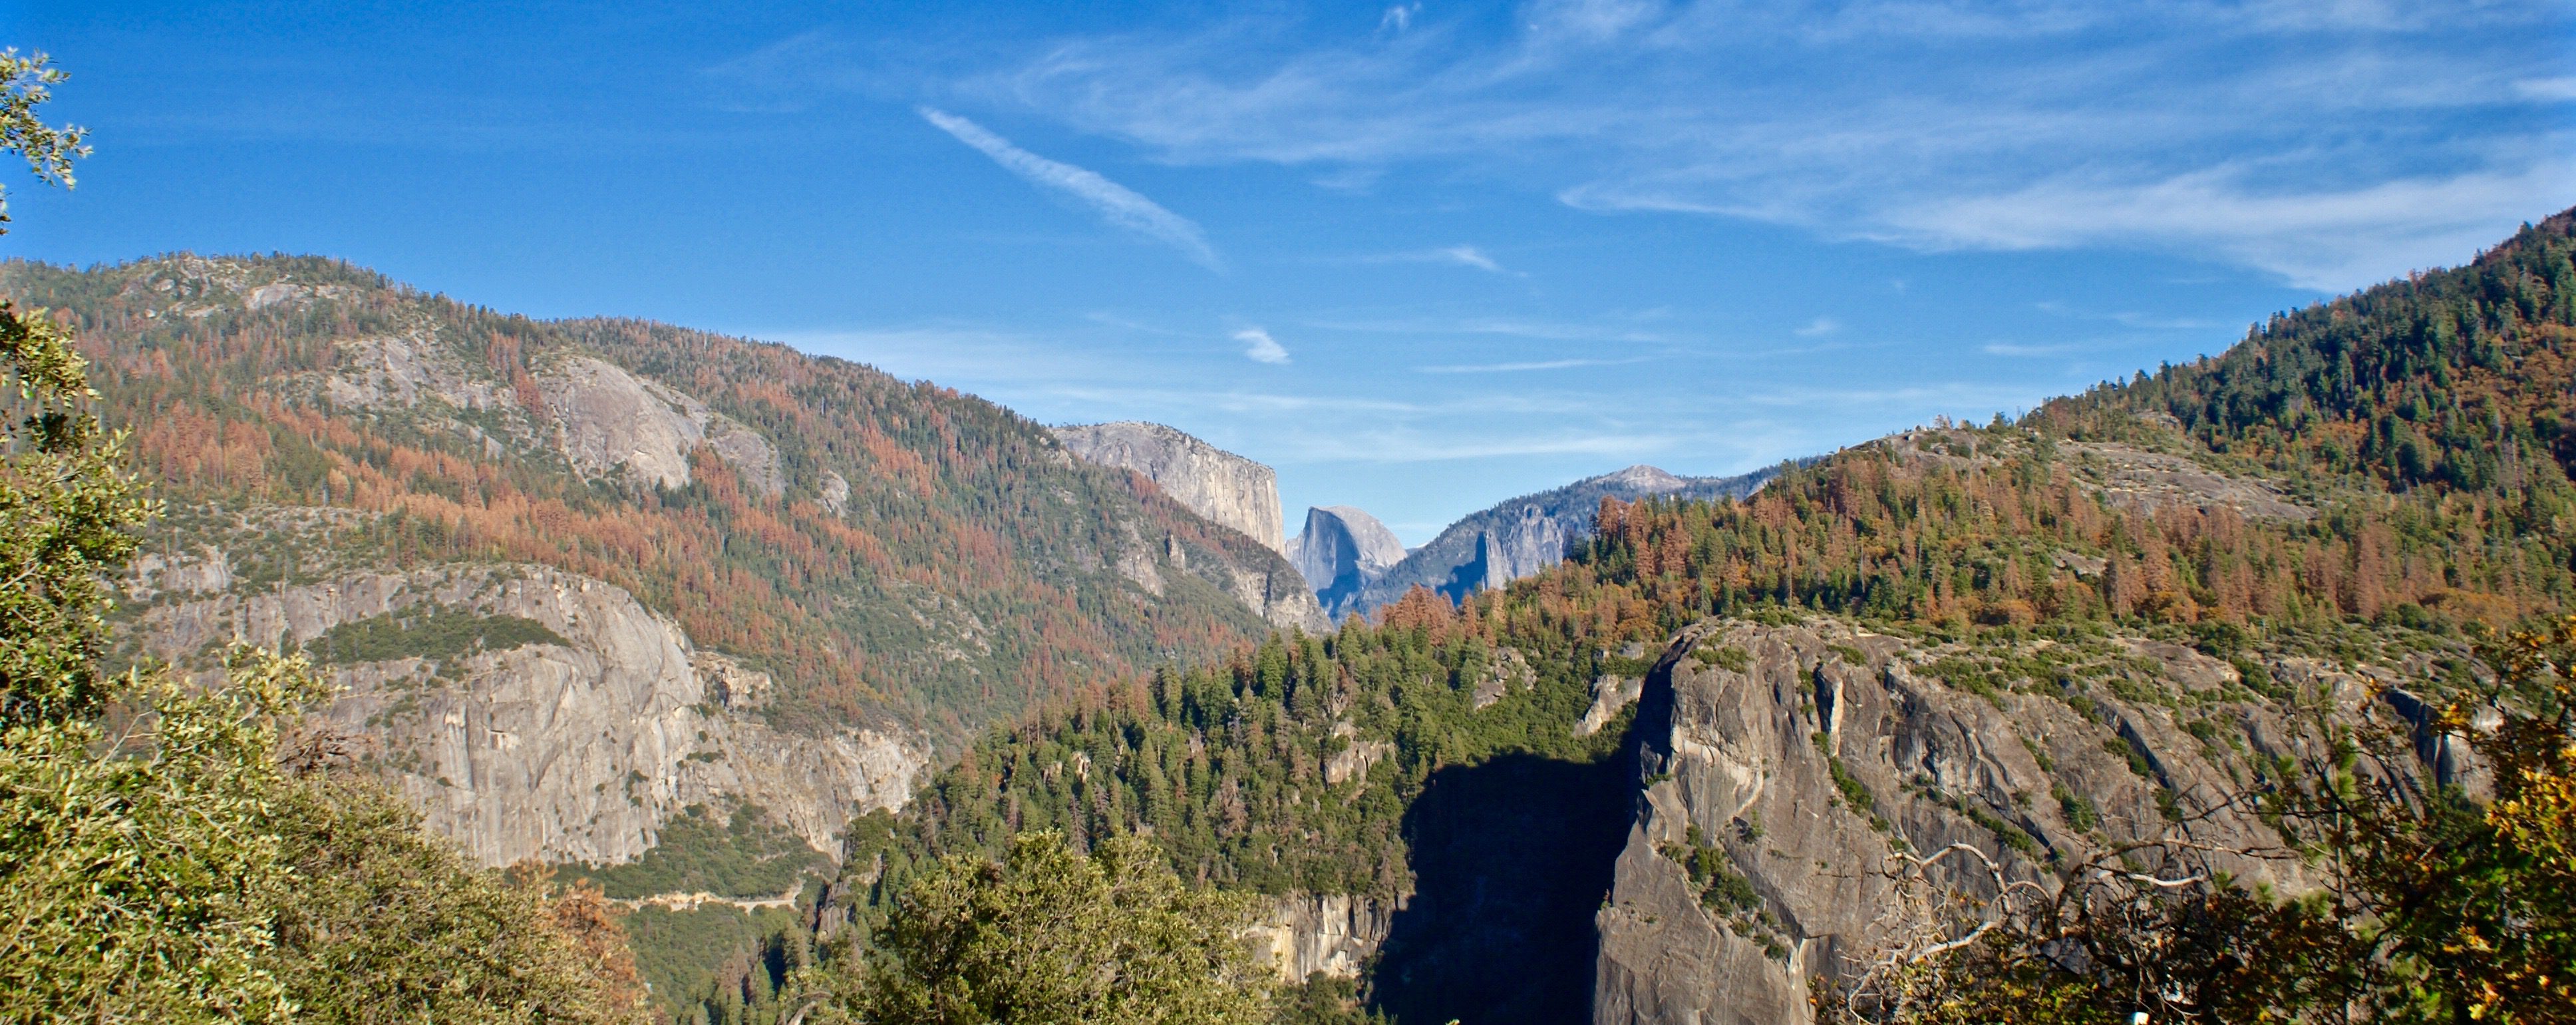 Free Camping in Yosemite